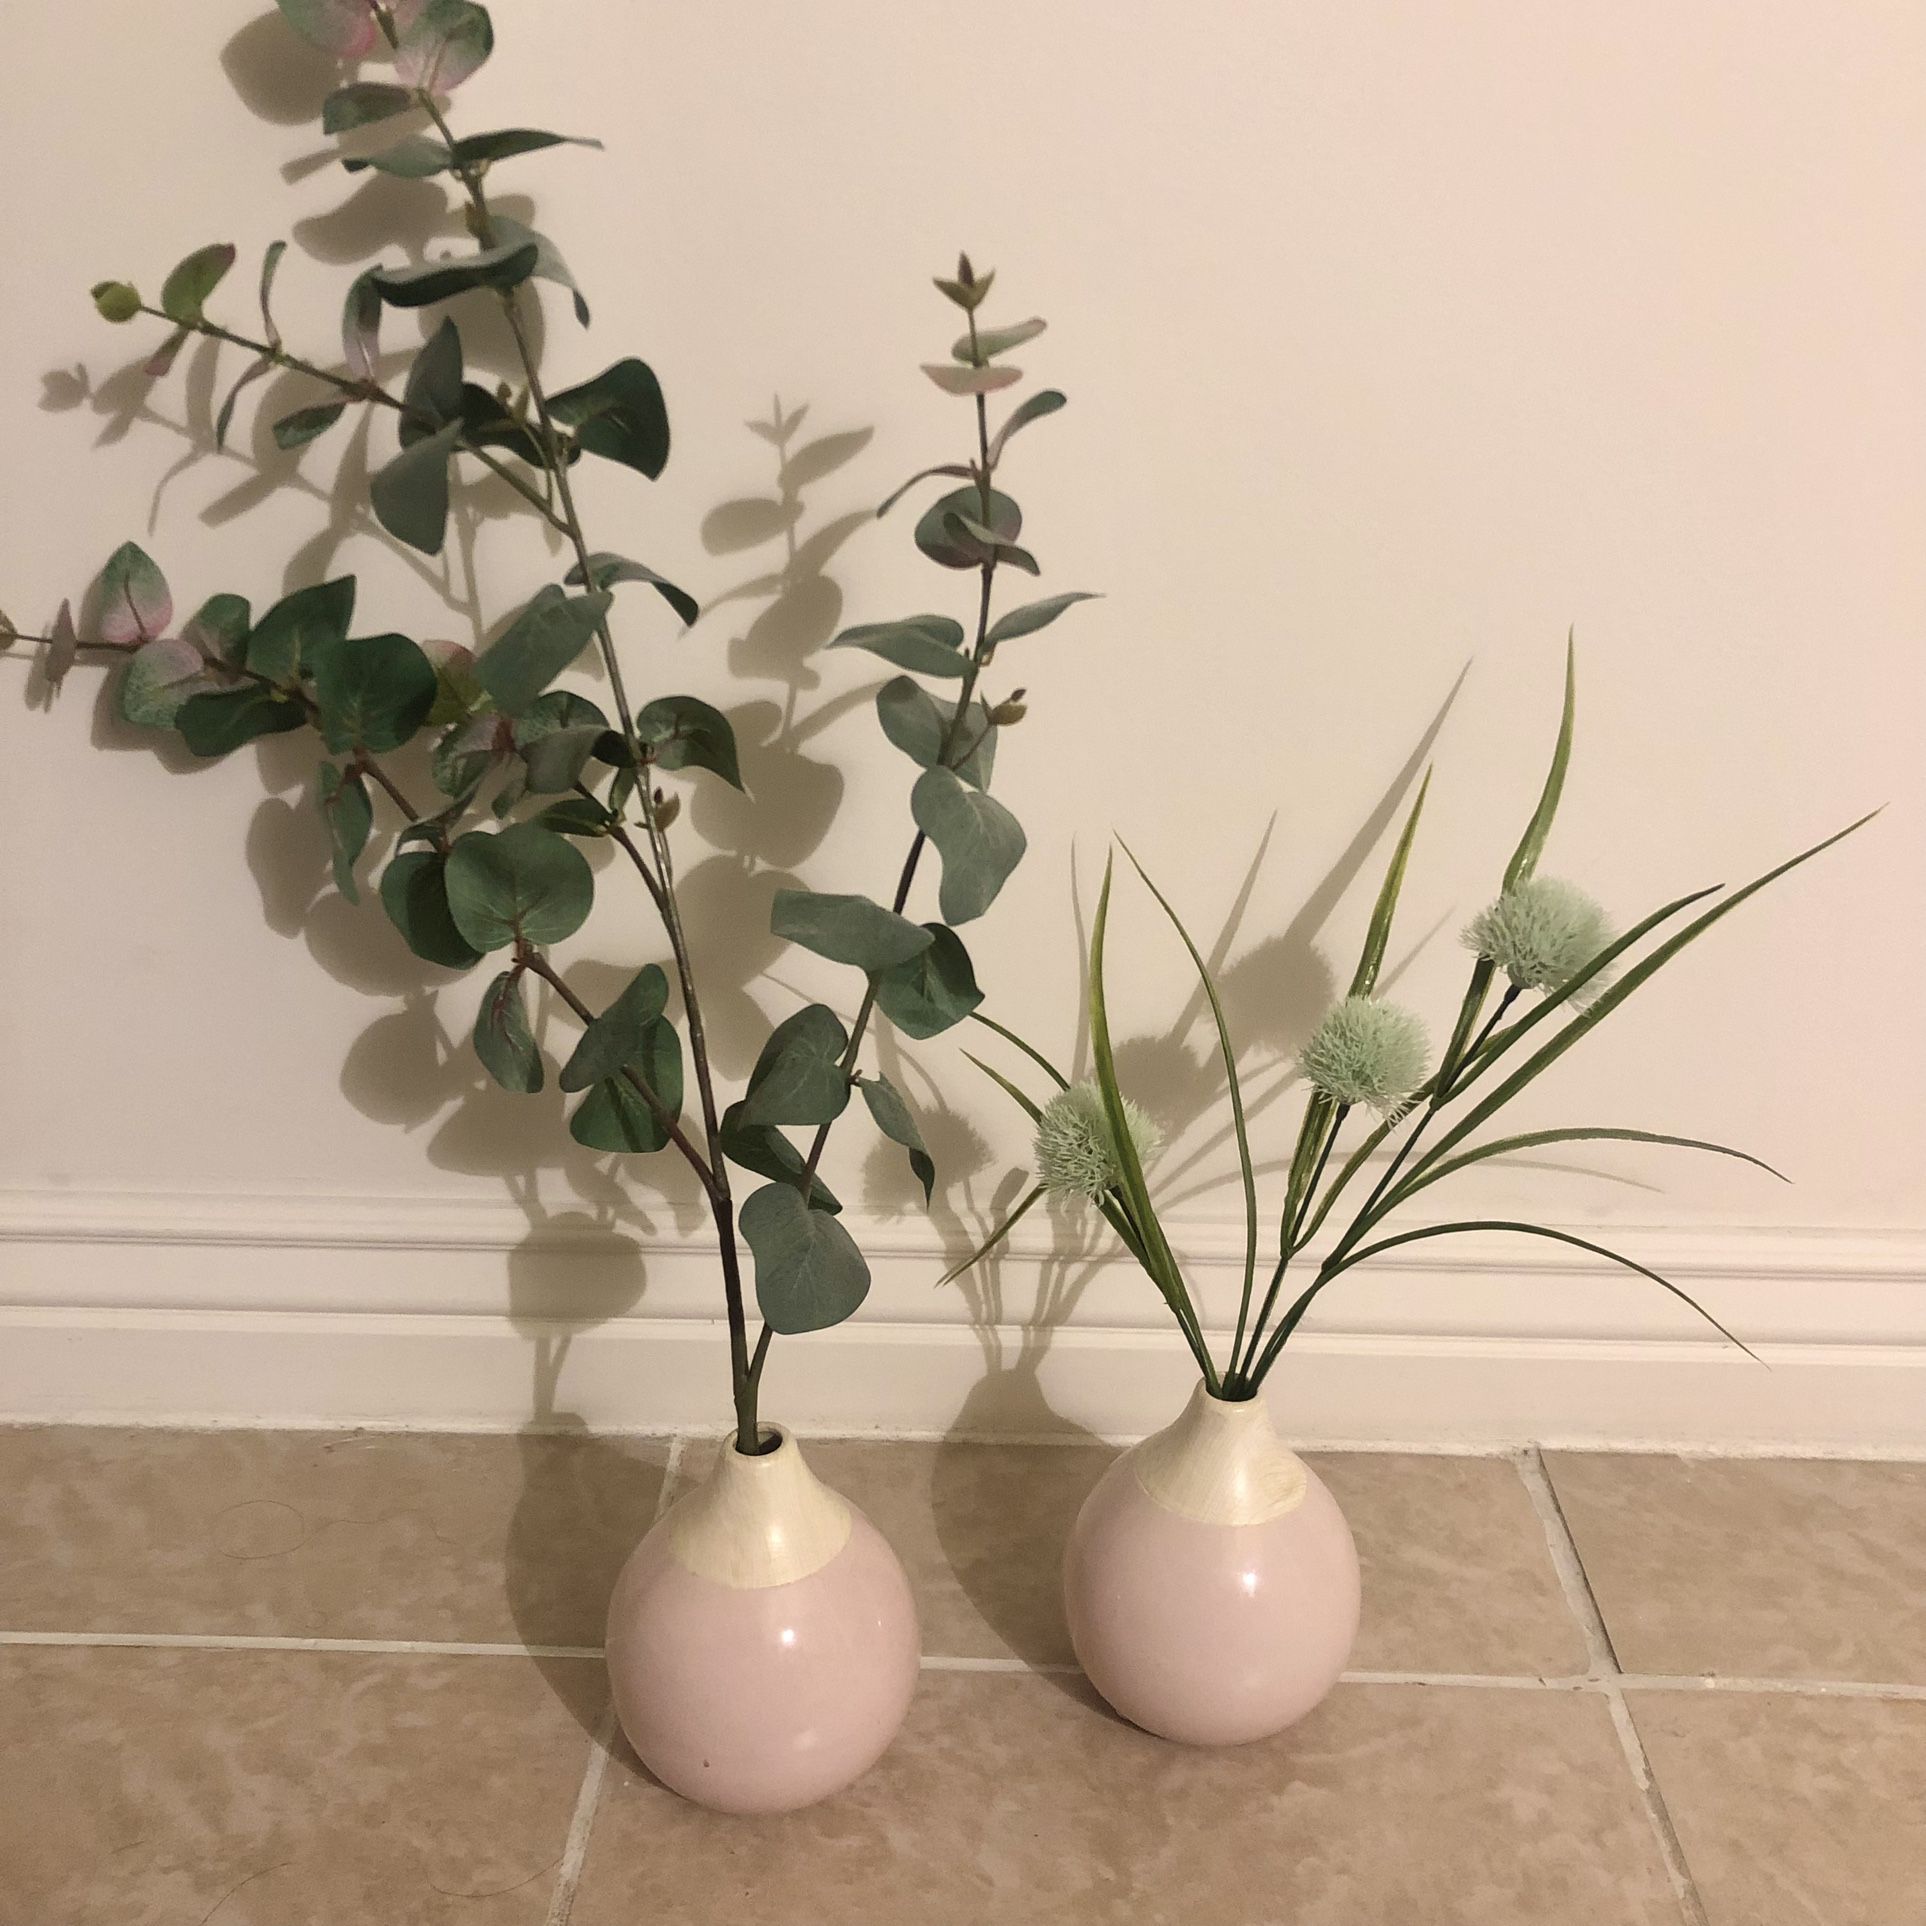 Vase and plants